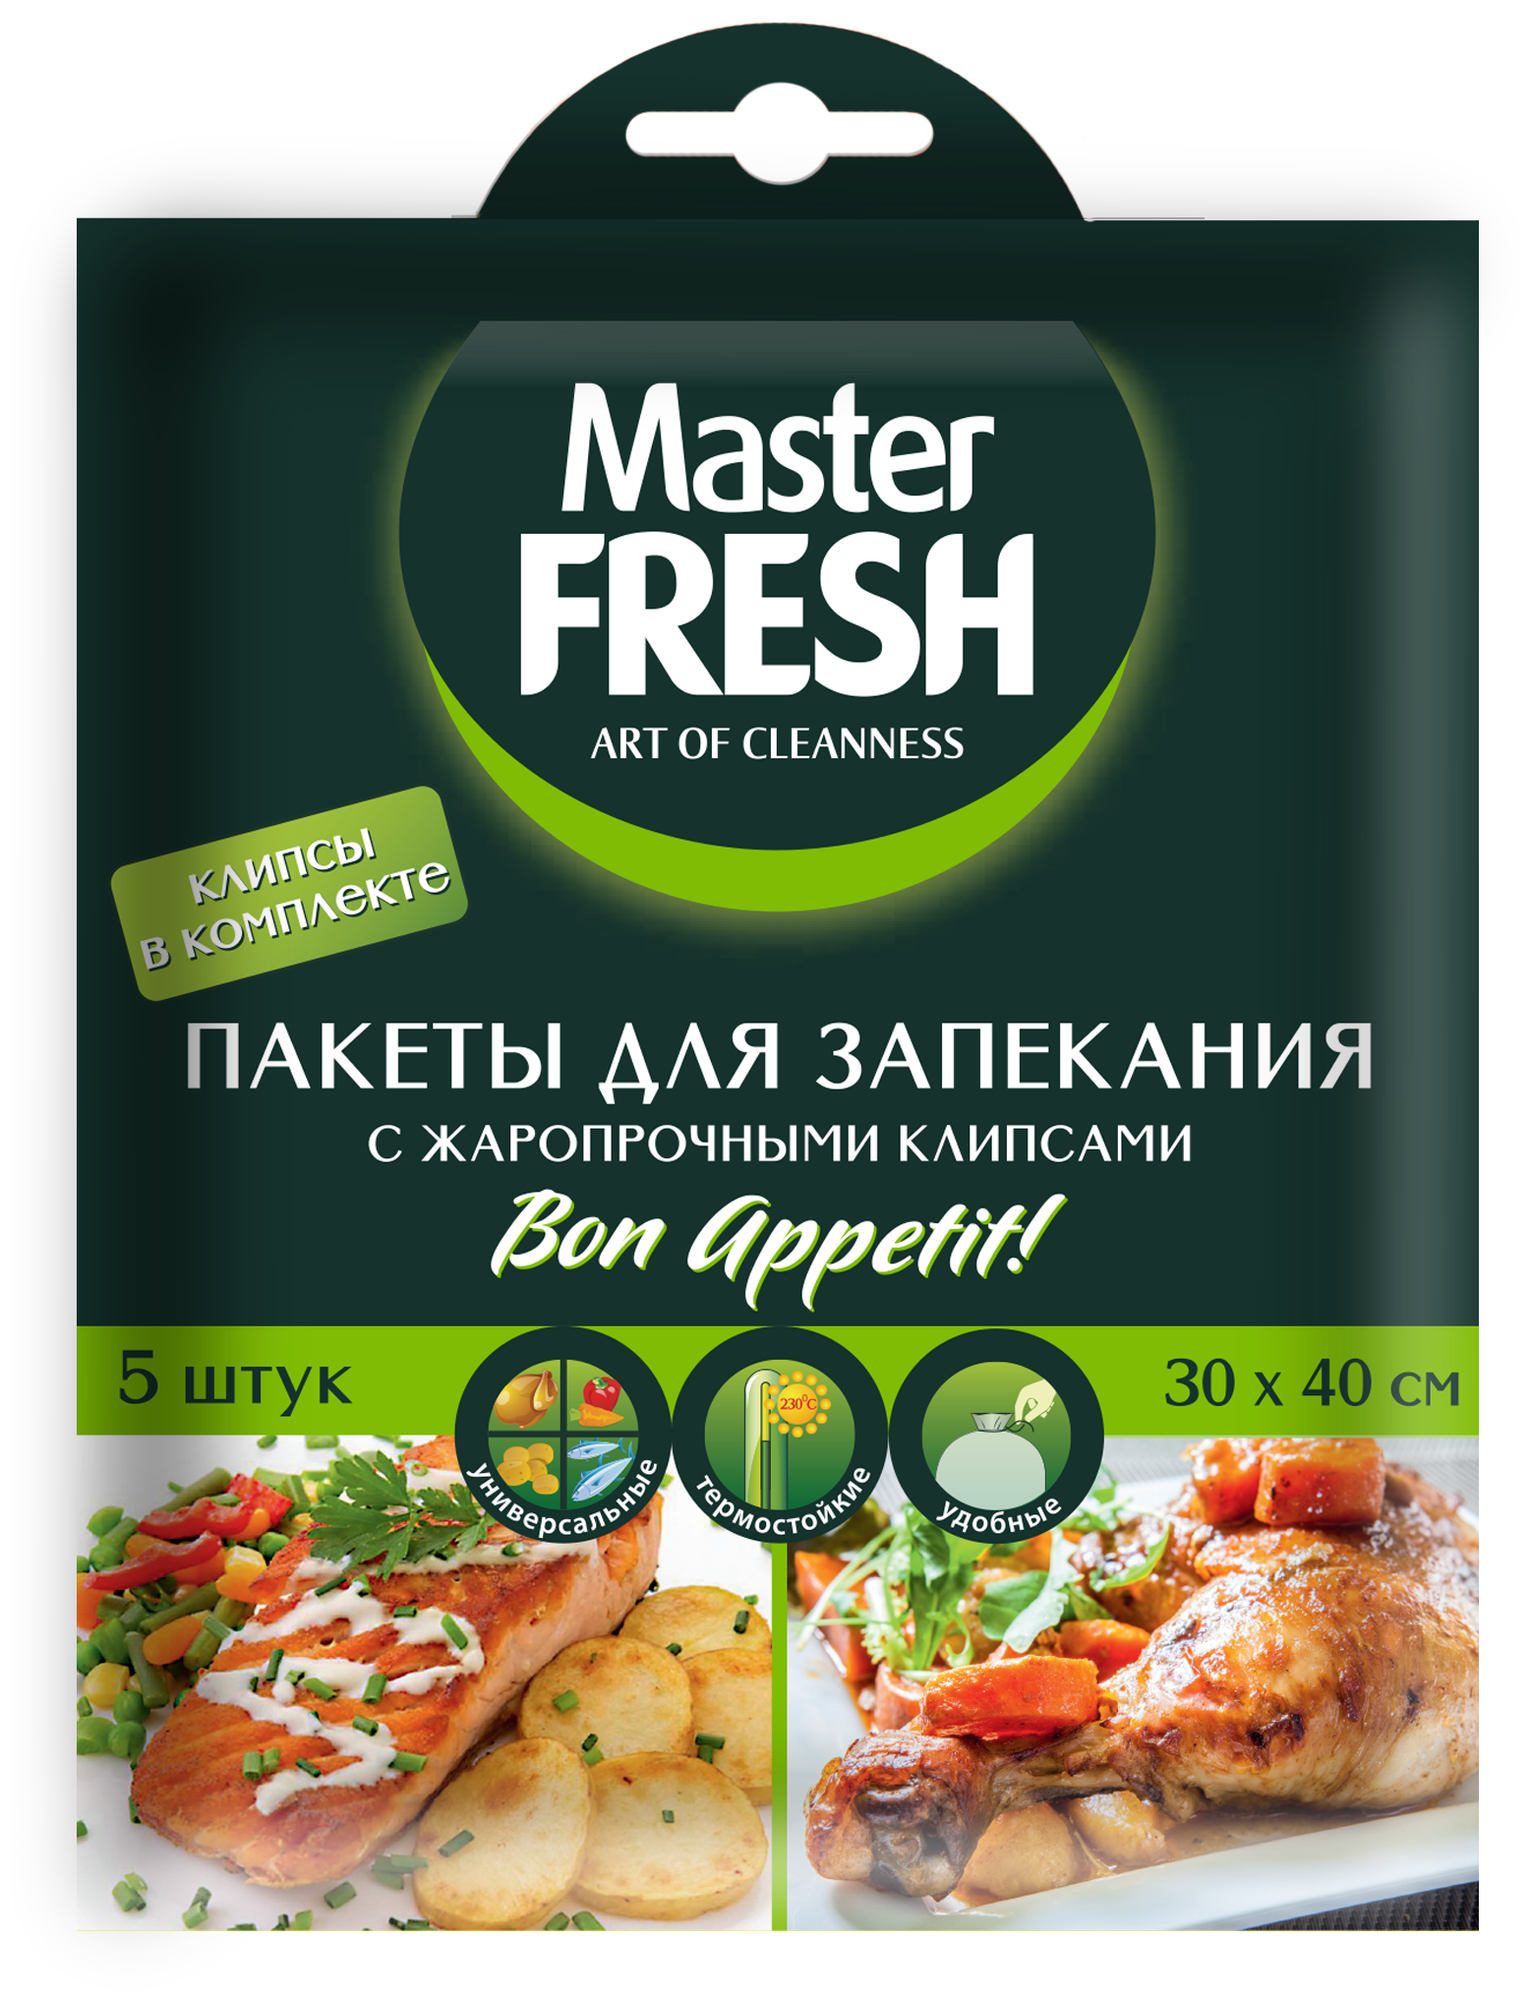 Пакеты для запекания Master Fresh, 30 x 40 см, 5 шт